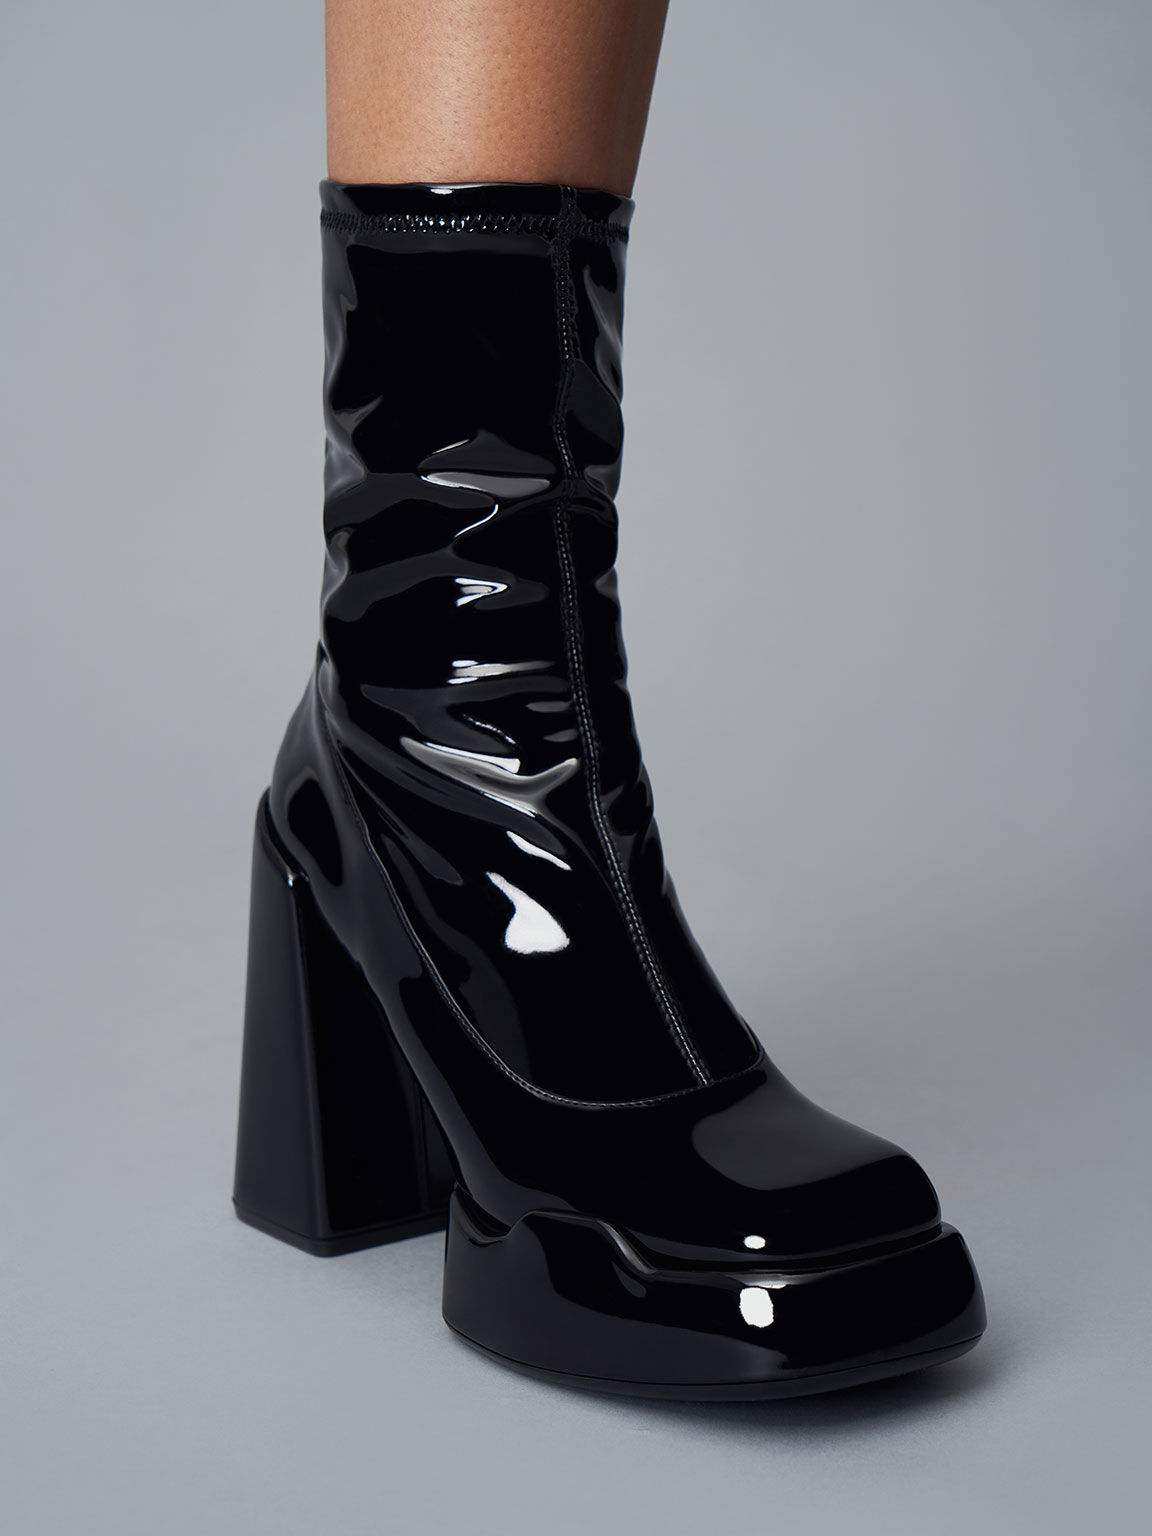 Delano Men's Black Patent Platform Heeled Boots – KOI footwear